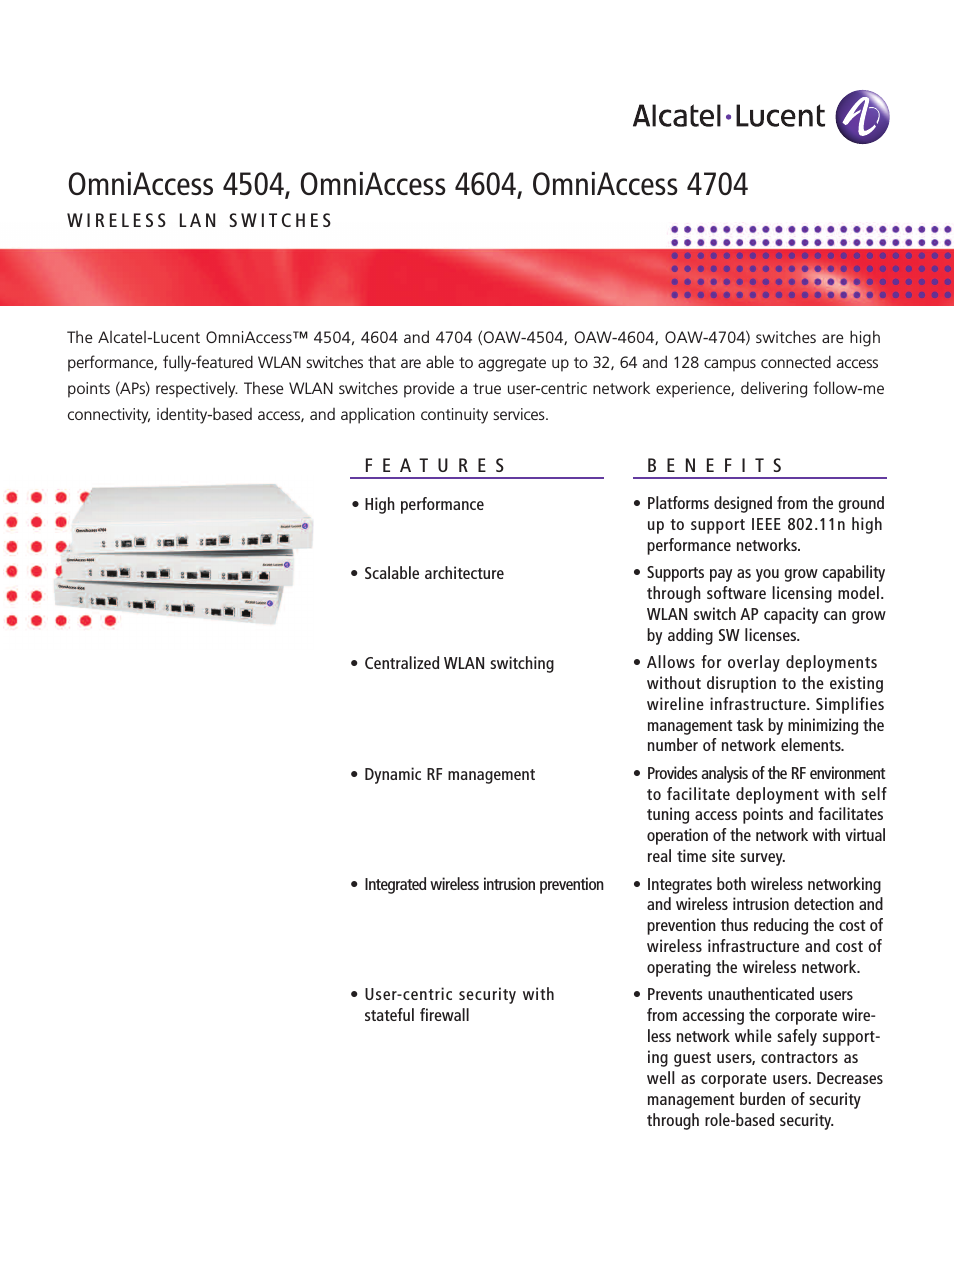 OmniAccess 4604